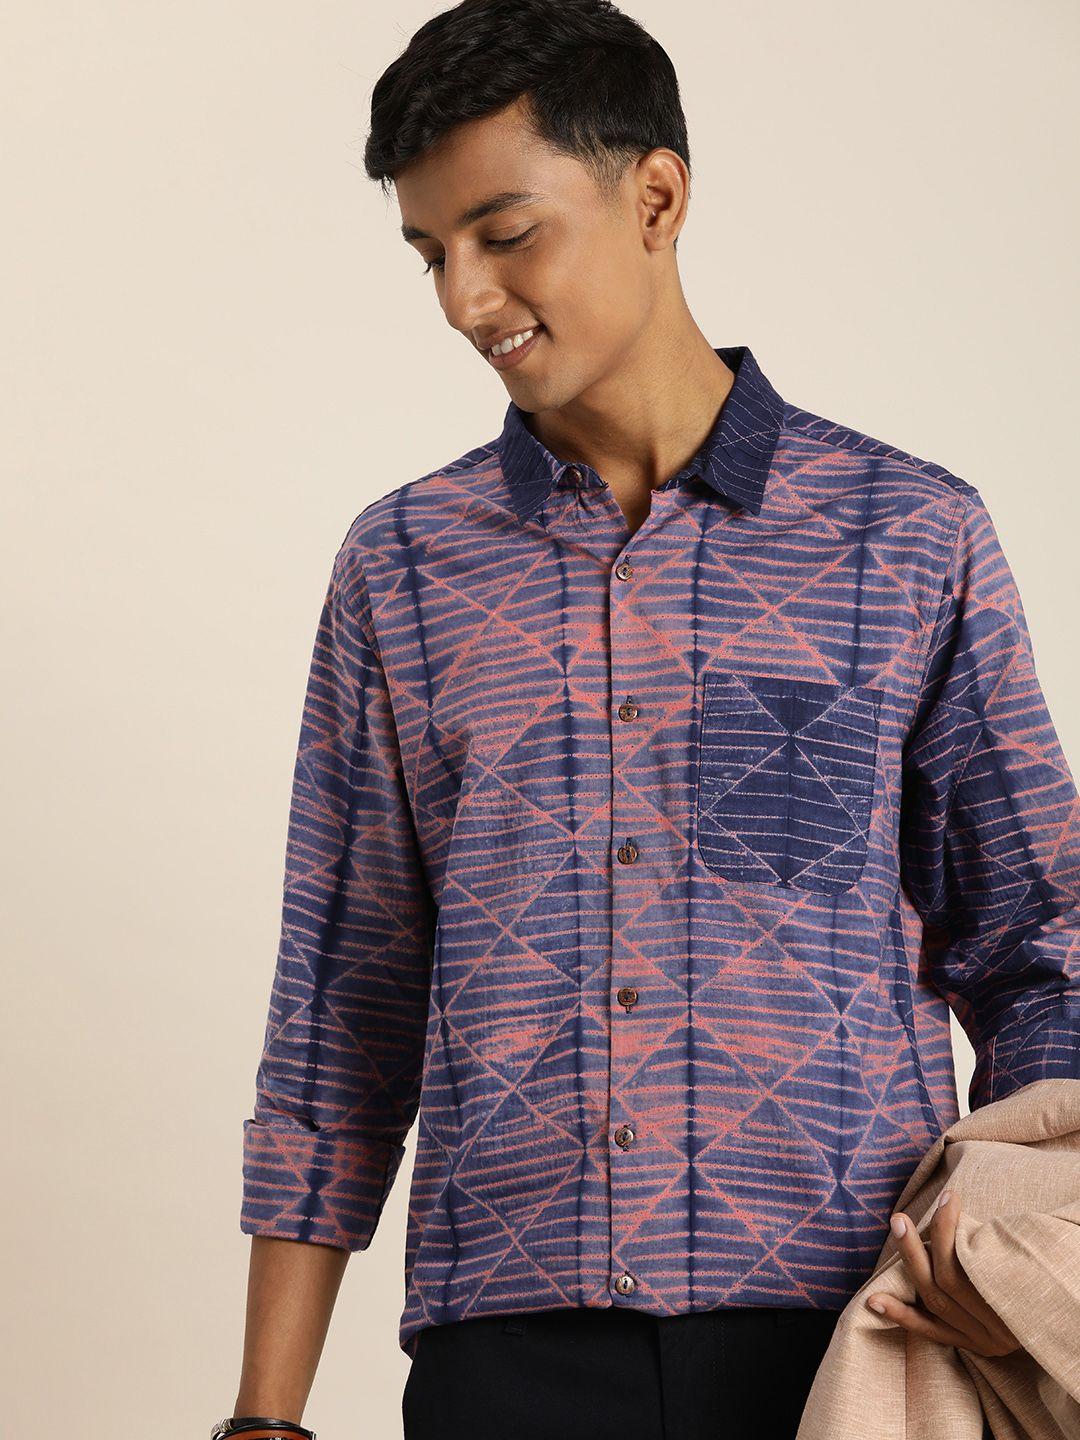 taavi geometric shibori printed pure cotton casual shirt